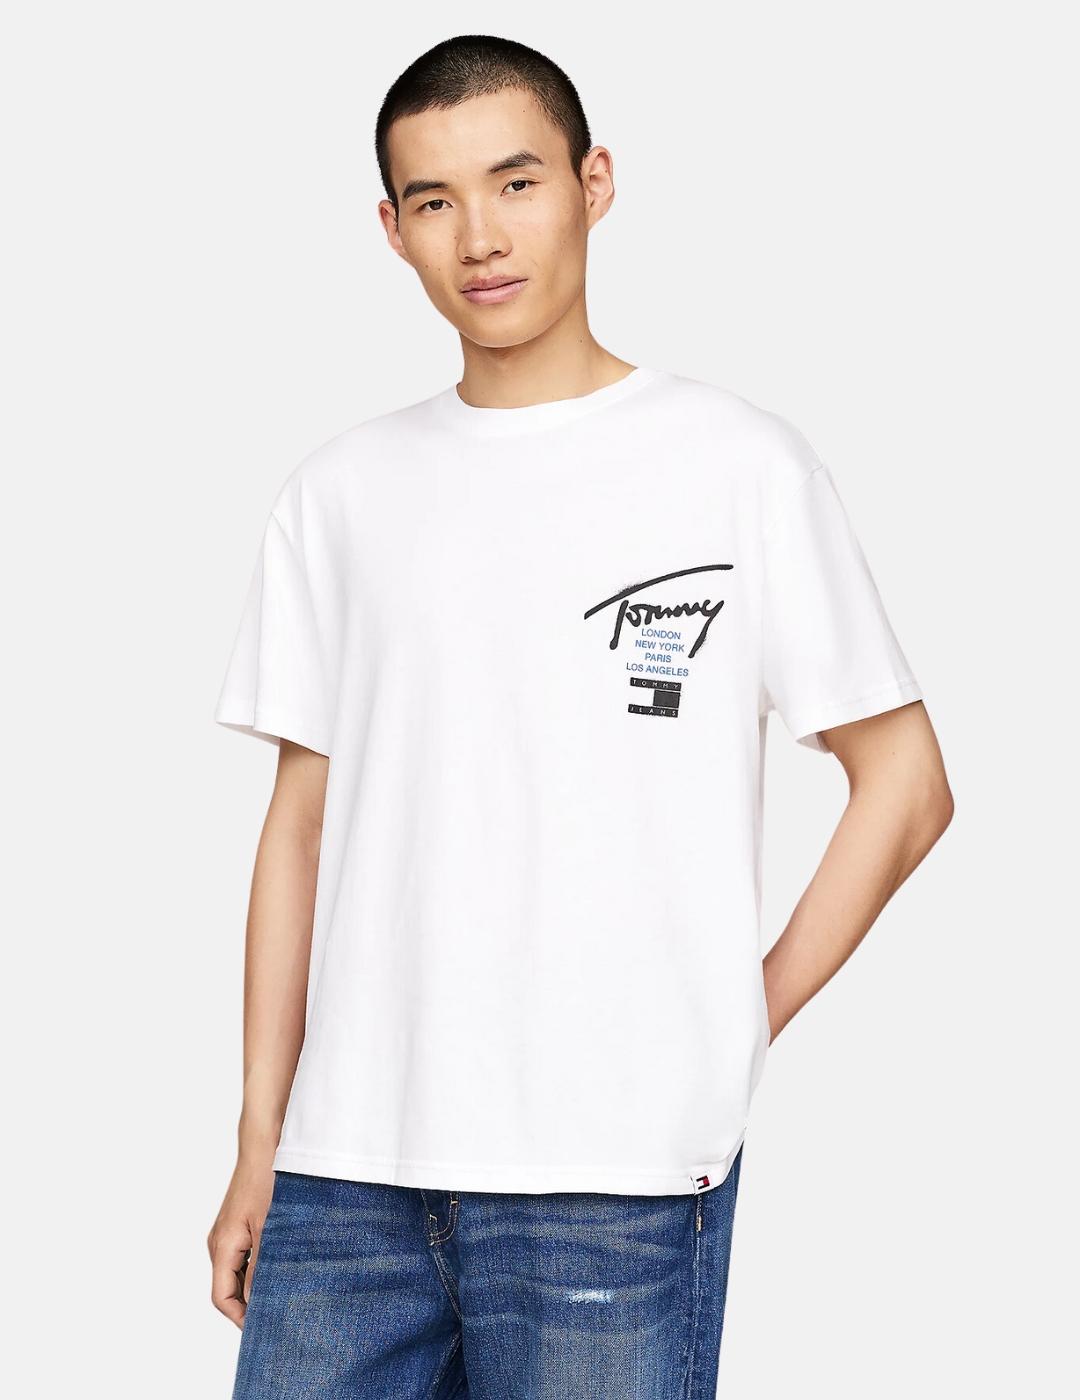 Camiseta Tommy Jeans hombre blanca con logo negro